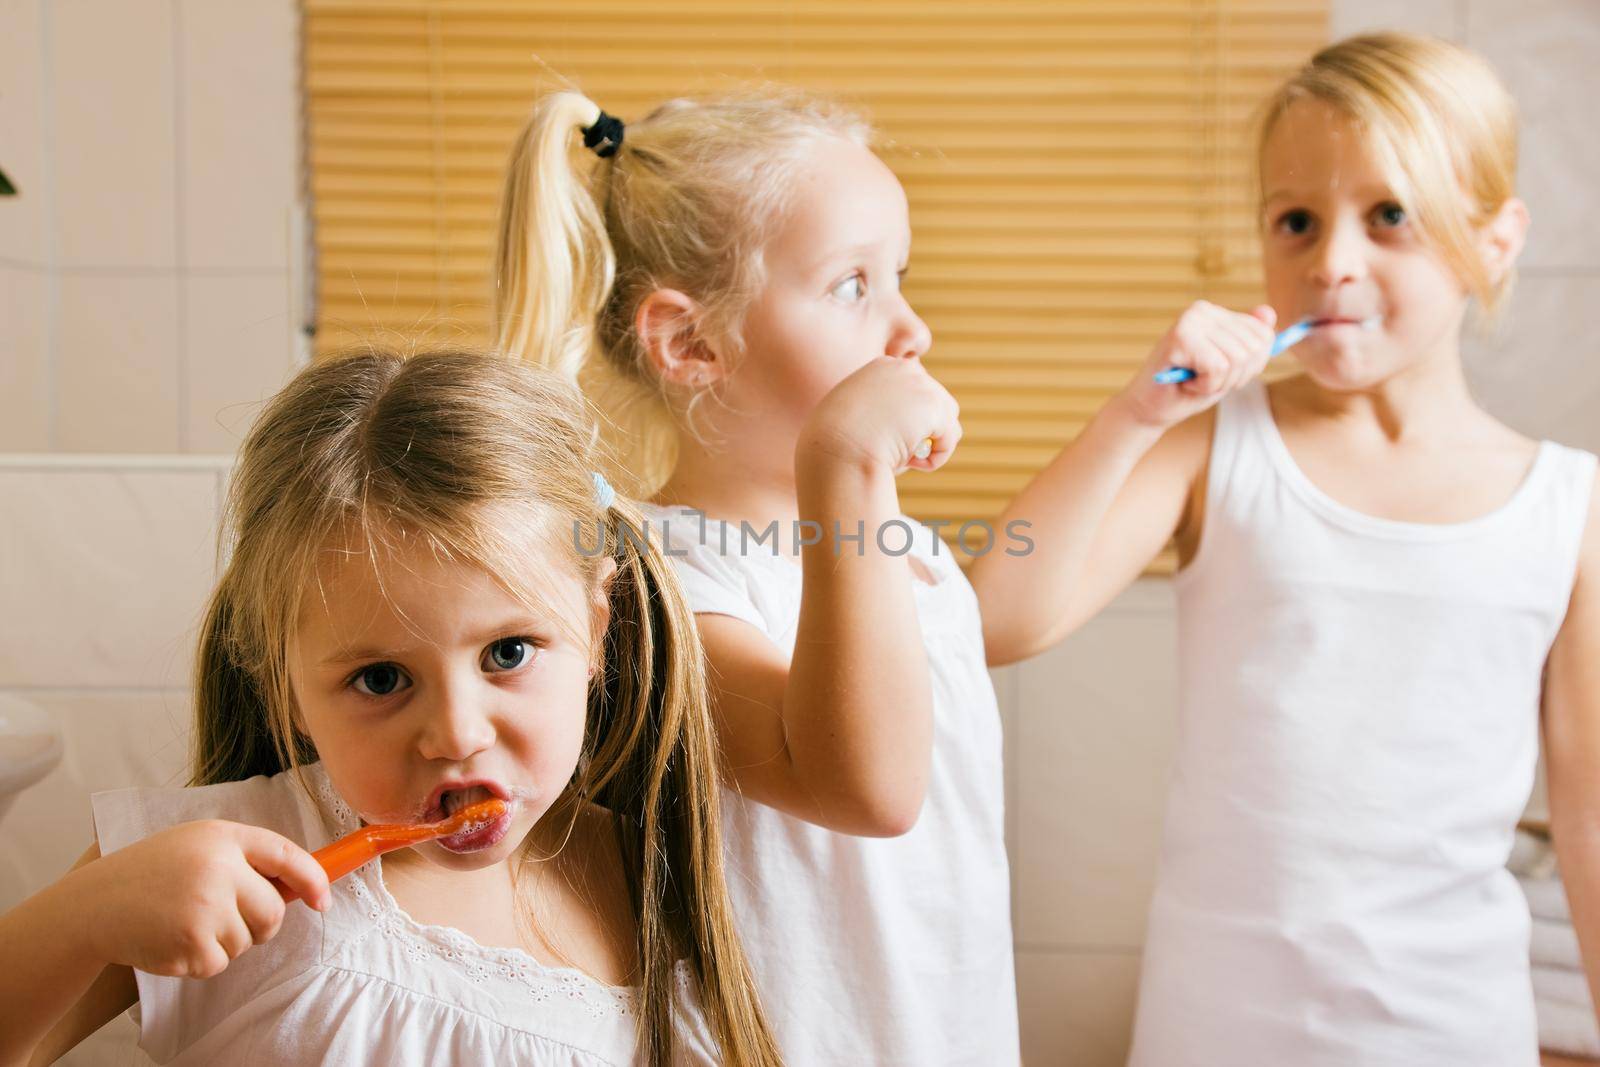 Three children - sisters - brushing their teeth